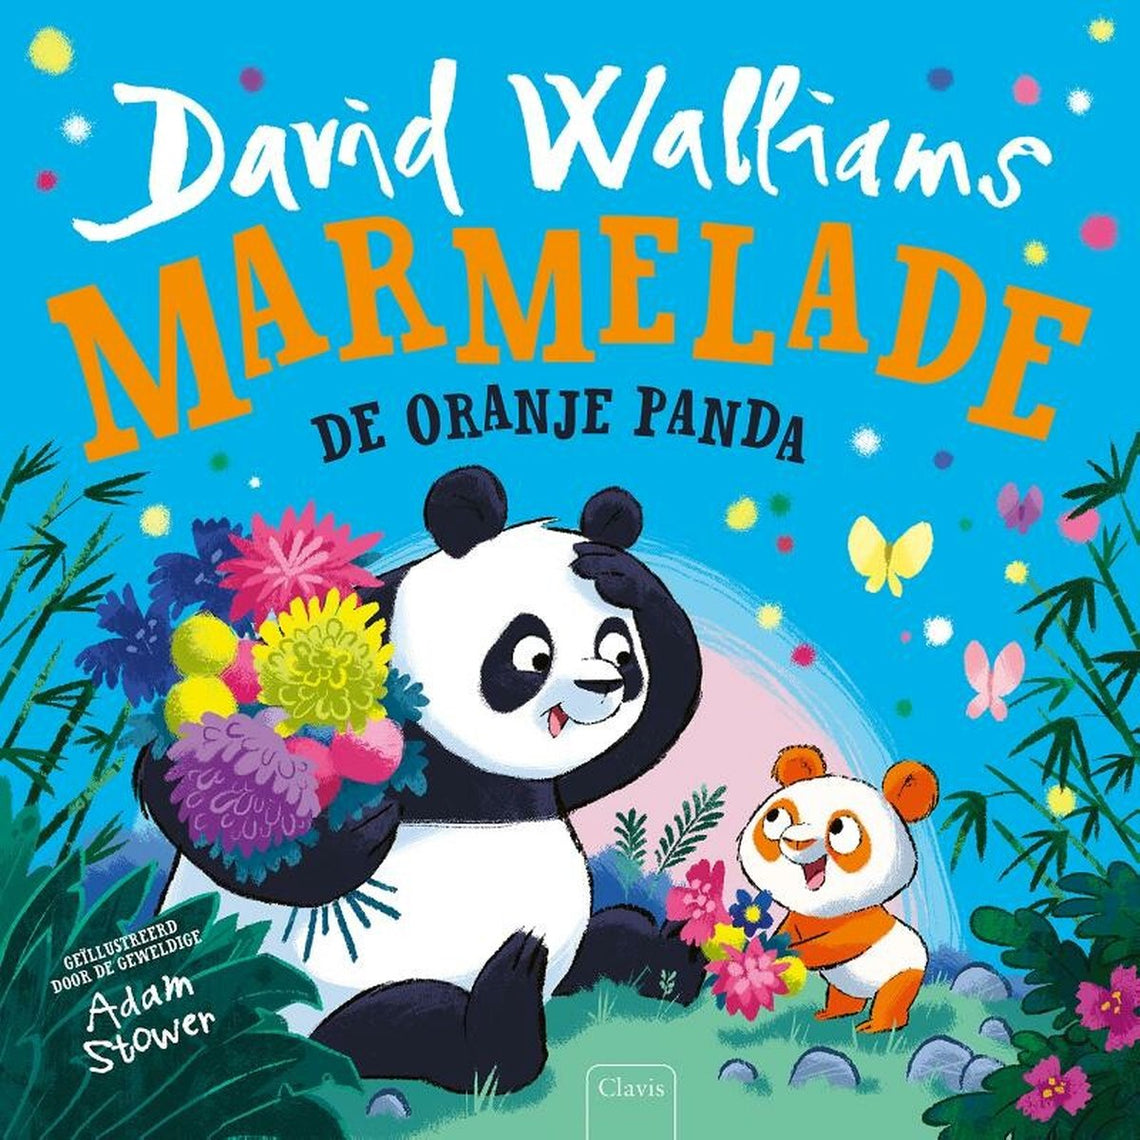 Marmelade de oranje panda - David Walliams